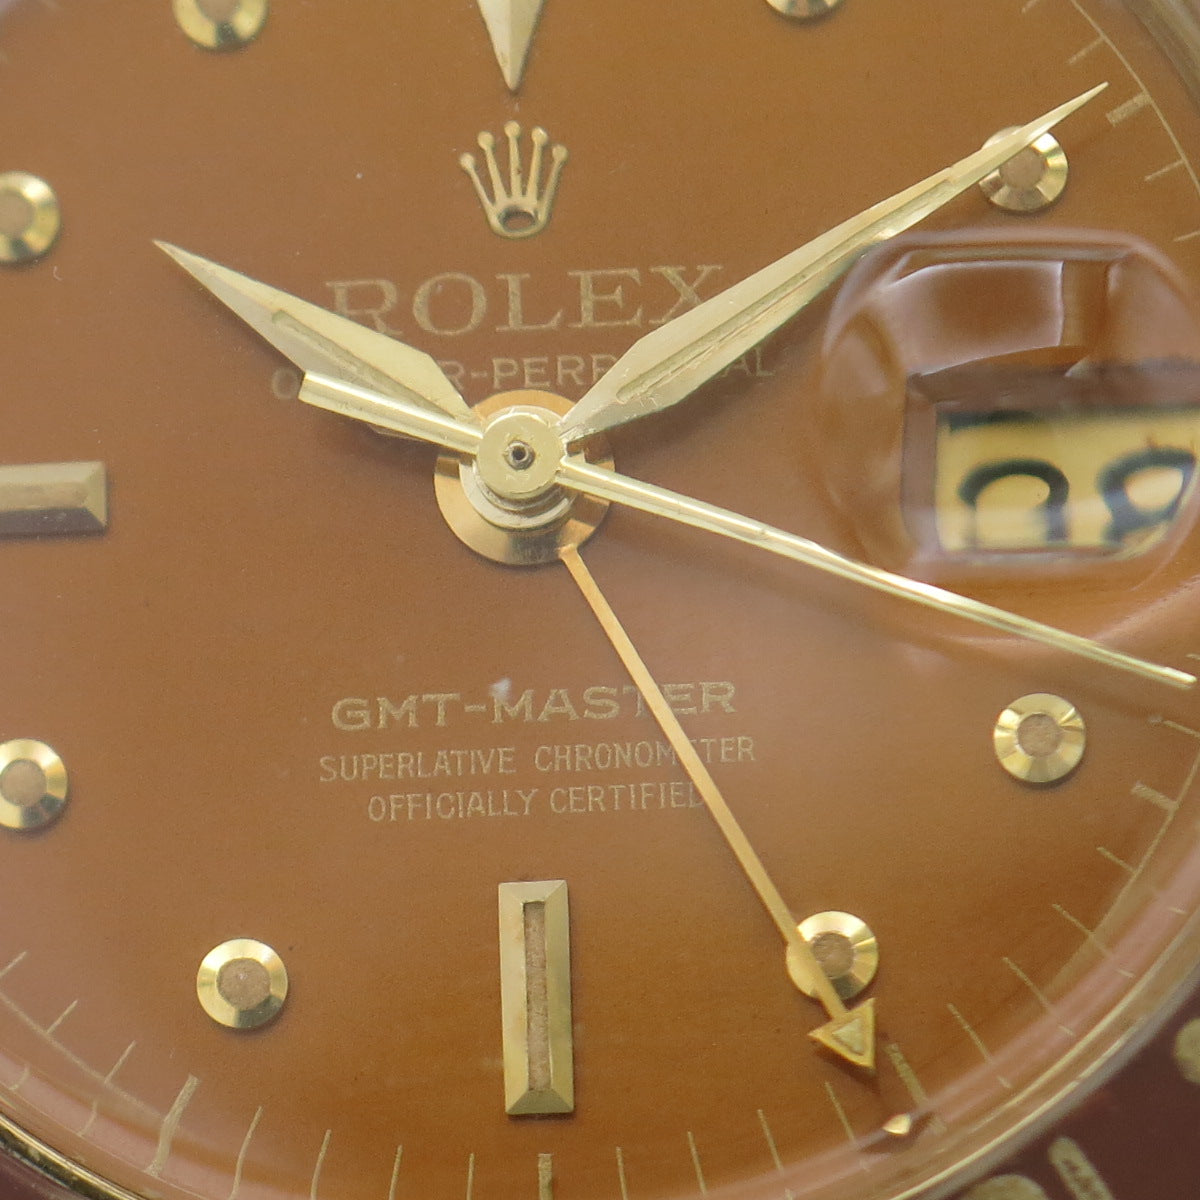 Rolex GMT ref. 6542 bachelite